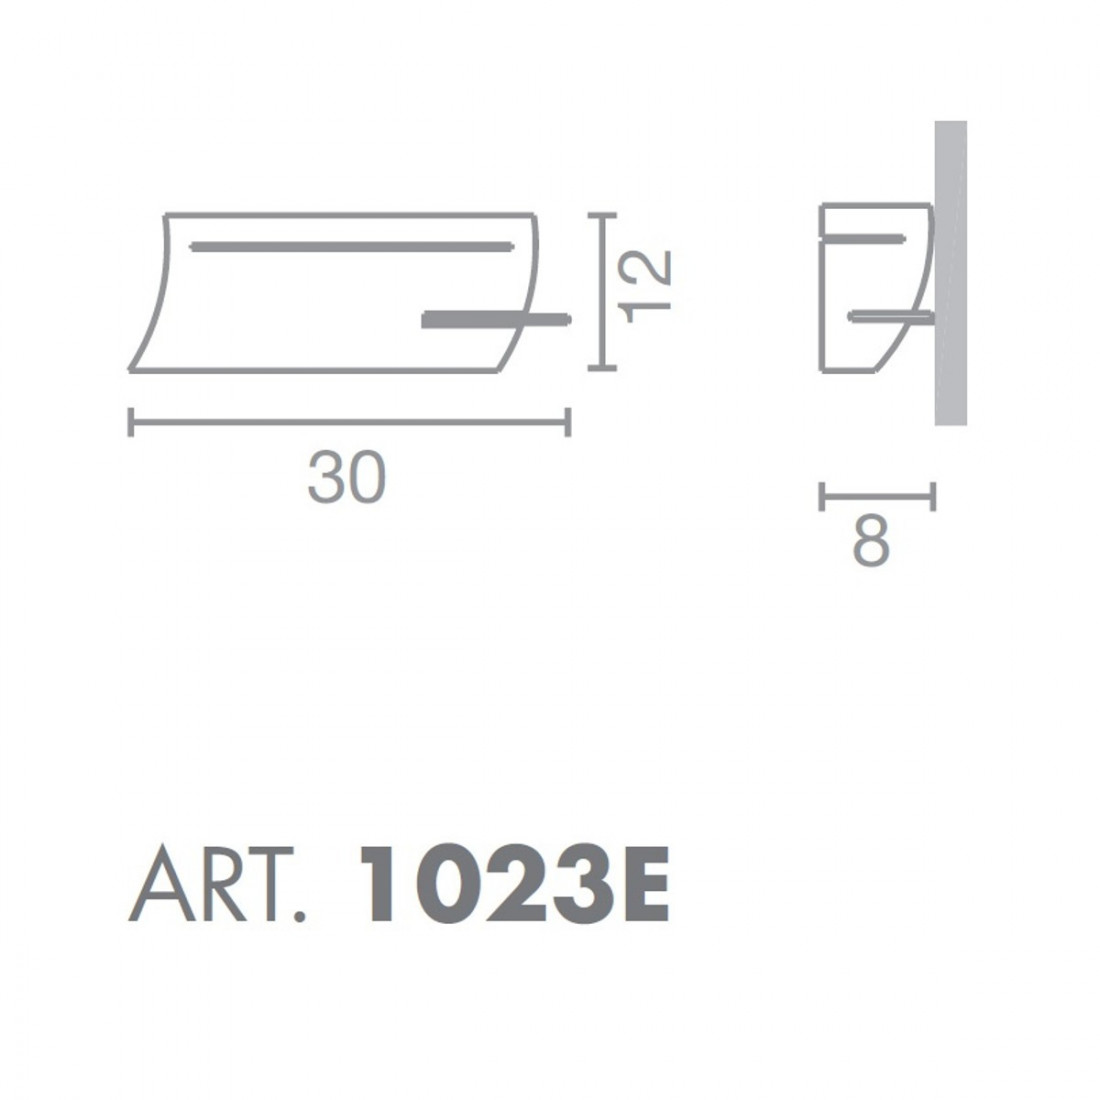 Applique SN-VULTUR 1023E E27 acciaio moderna lampada parete interno IP20